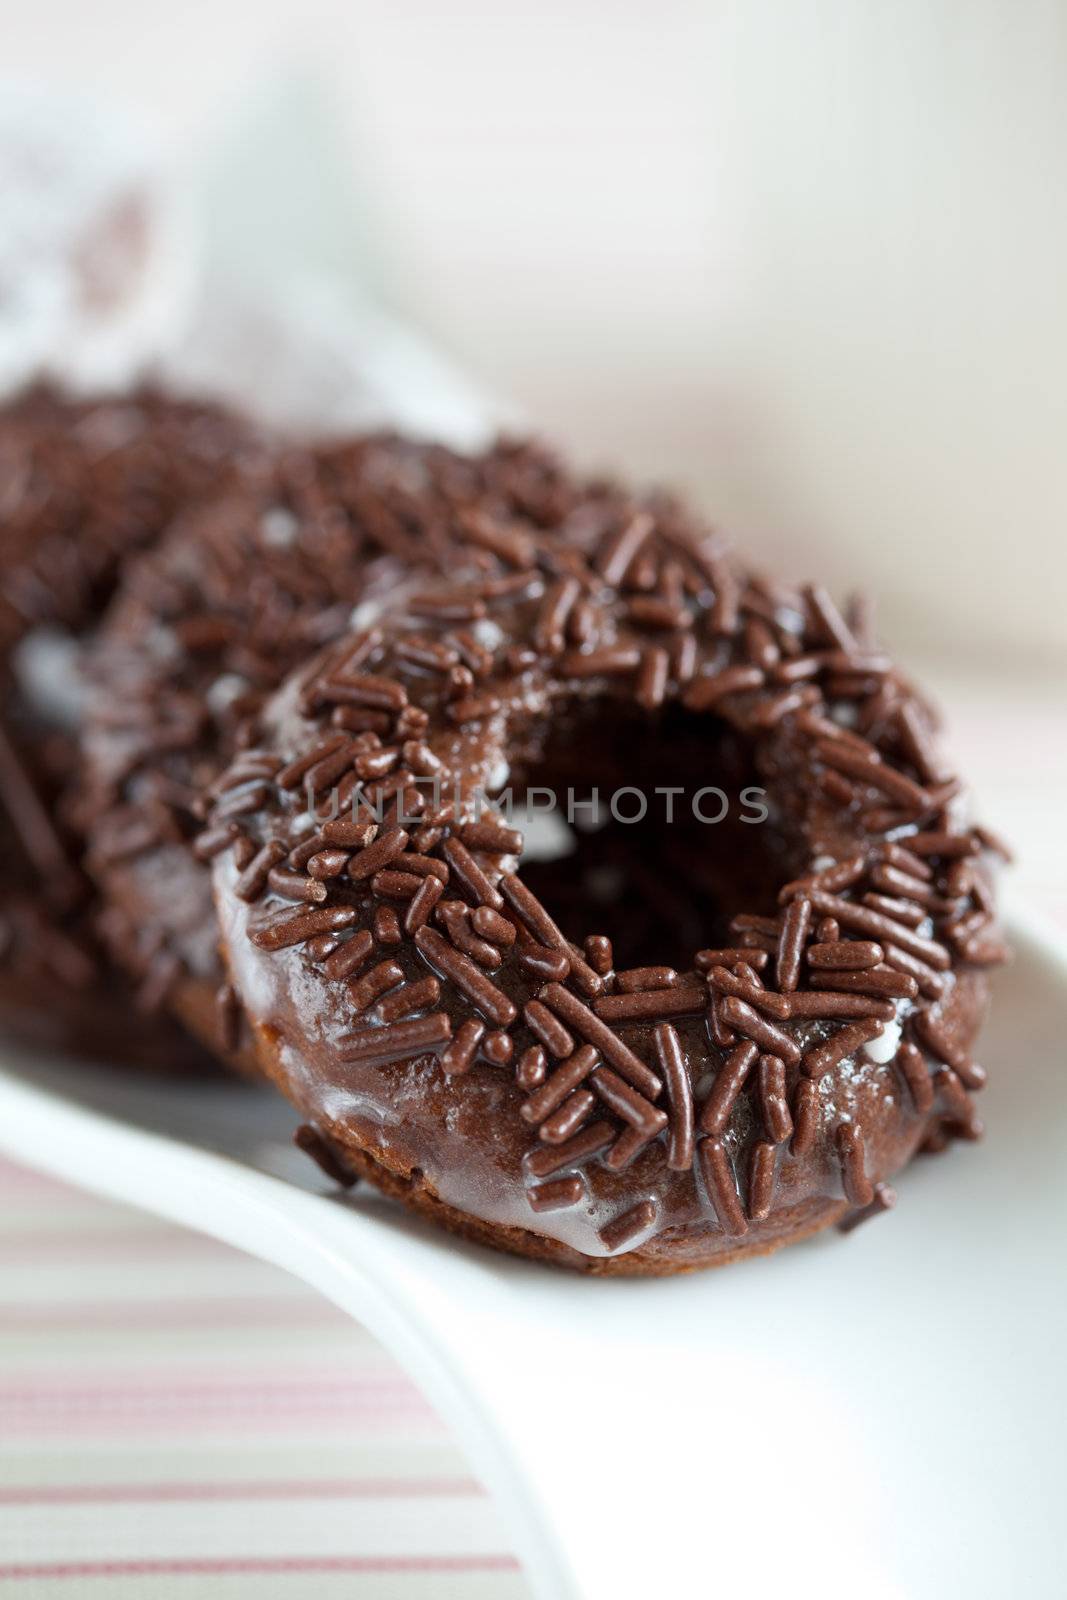 Chocolate doughnuts by Fotosmurf